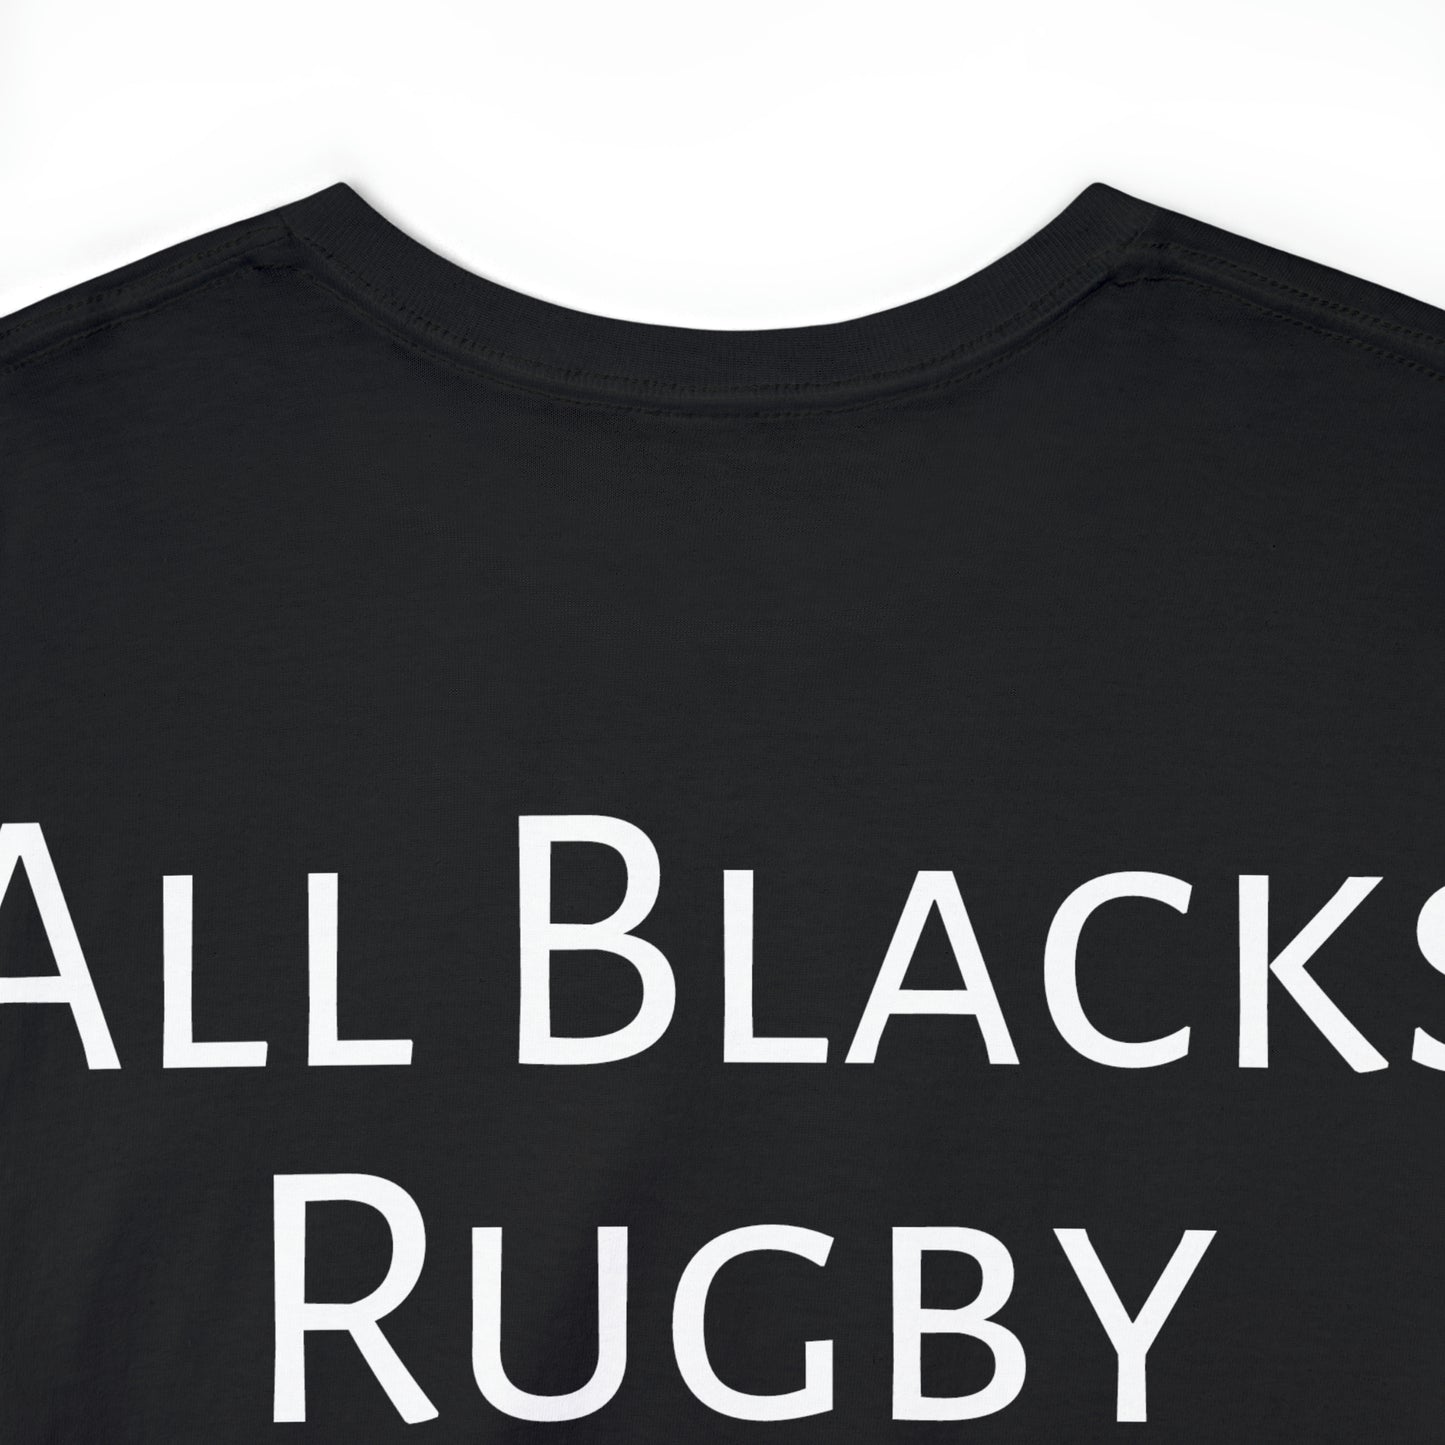 All Blacks with Web Ellis Cup - black shirt